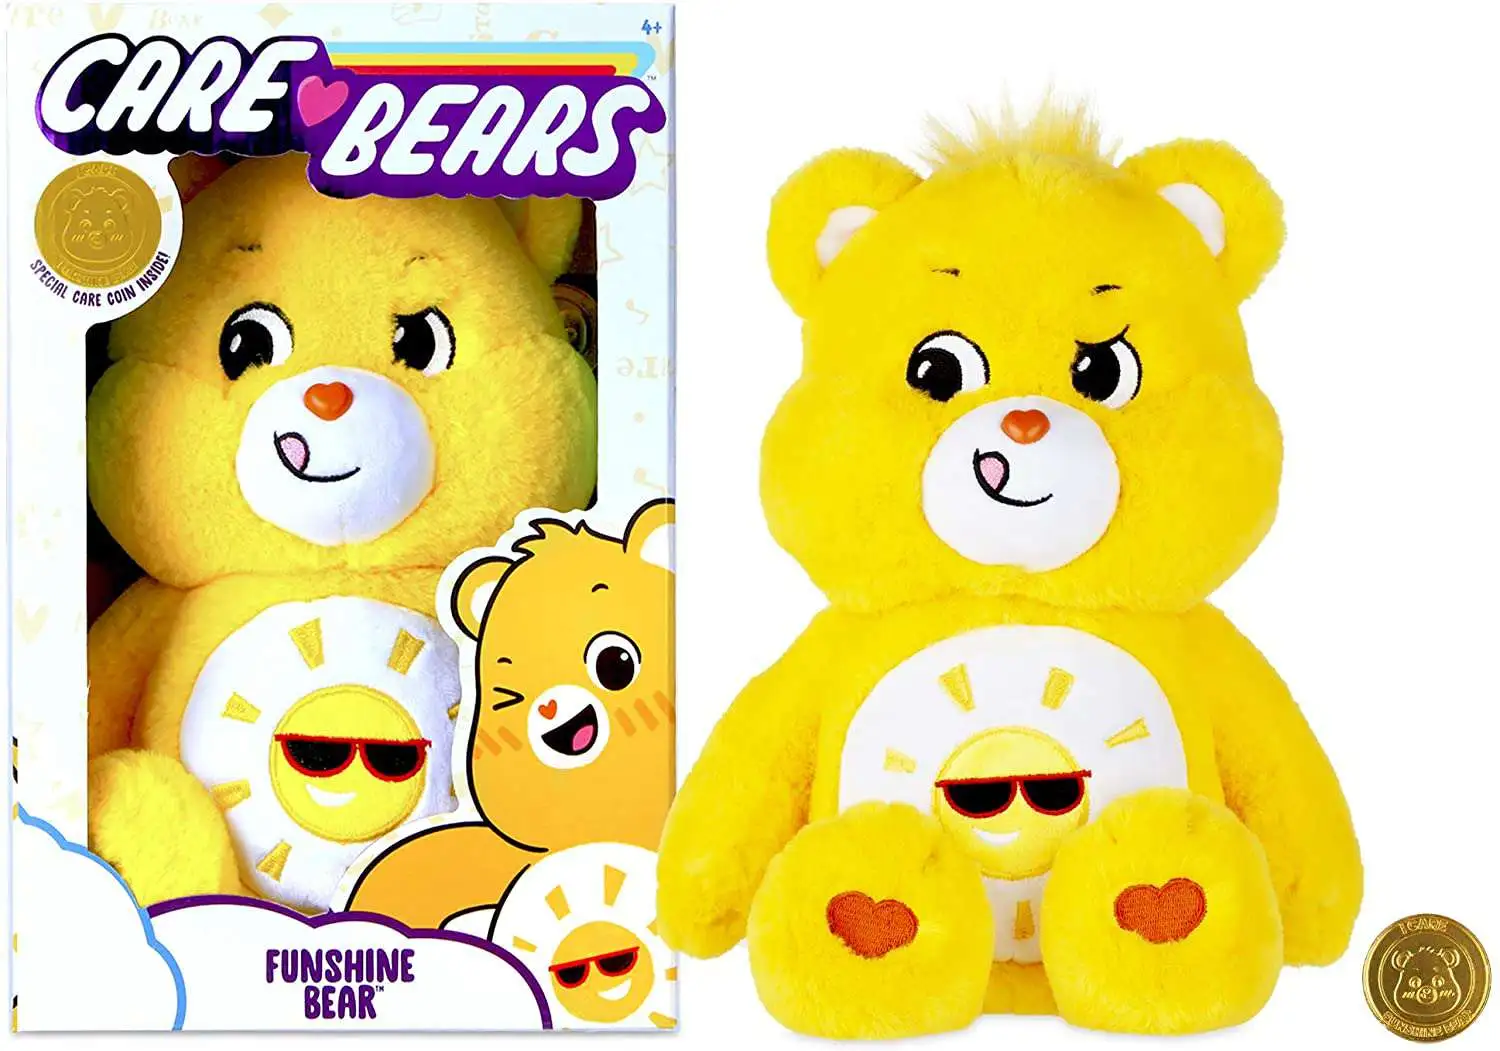 Collectable Cute Plush Toy, Care Bears 22087 14 Inch Medium Plush Funshine Bear 